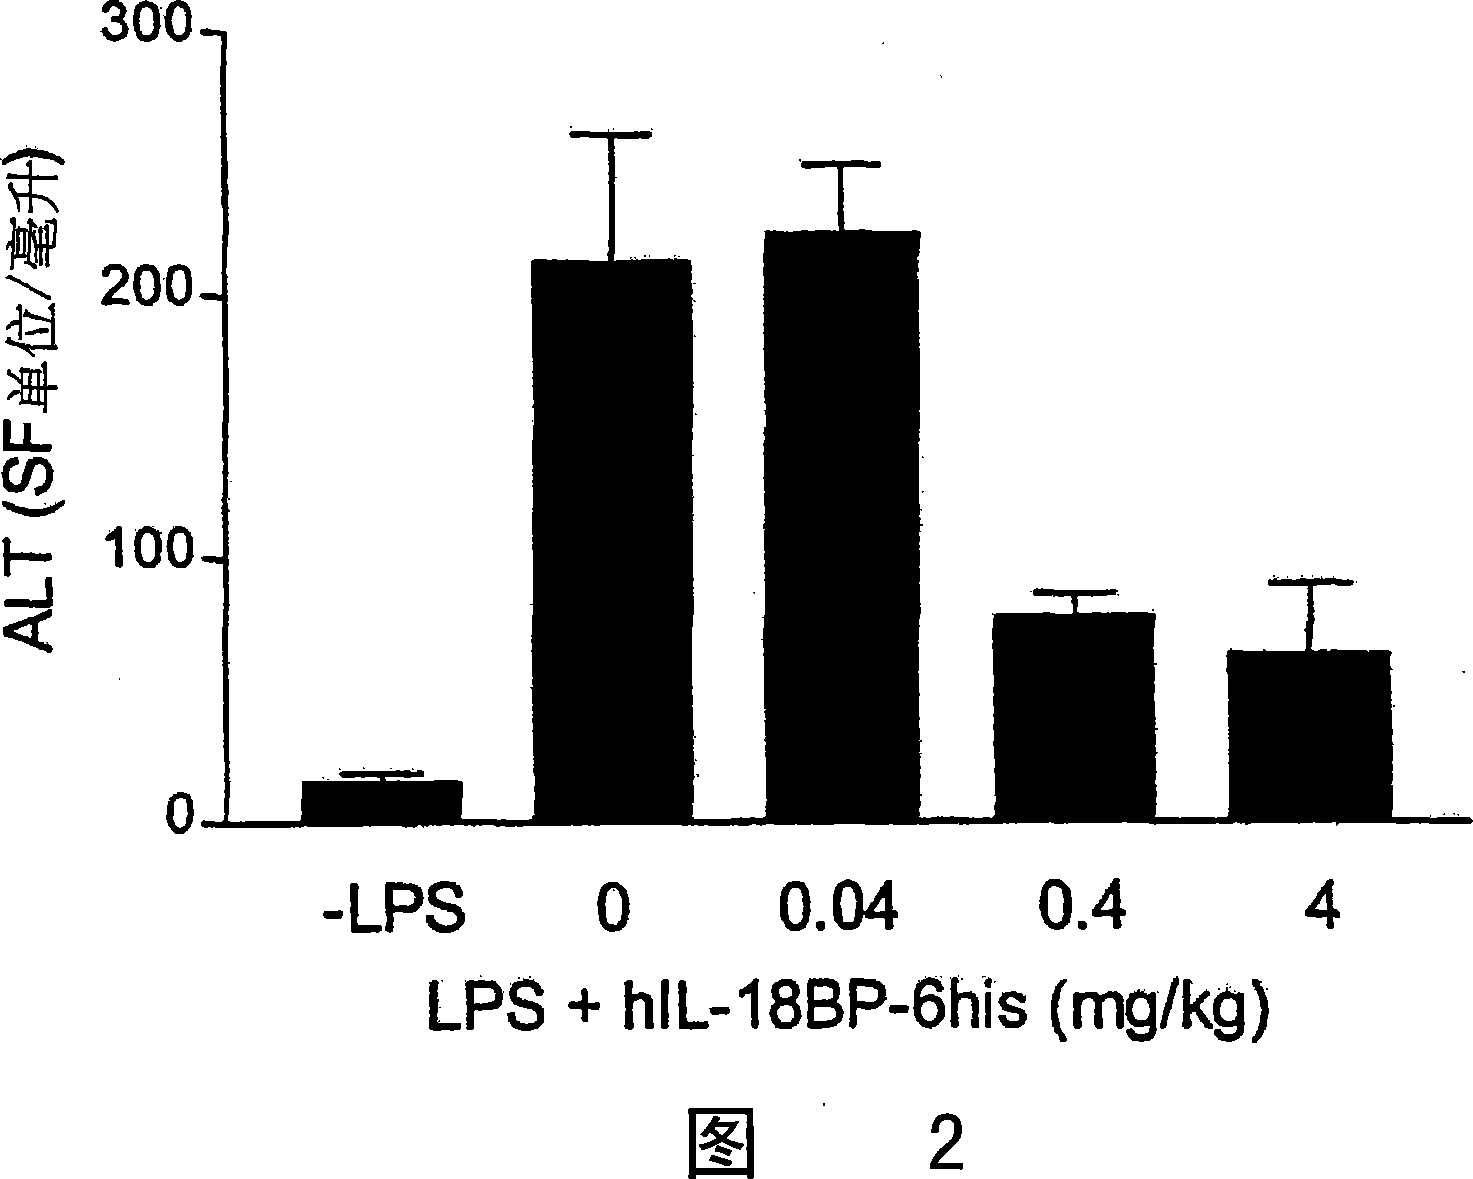 Use of IL-18 inhibitors